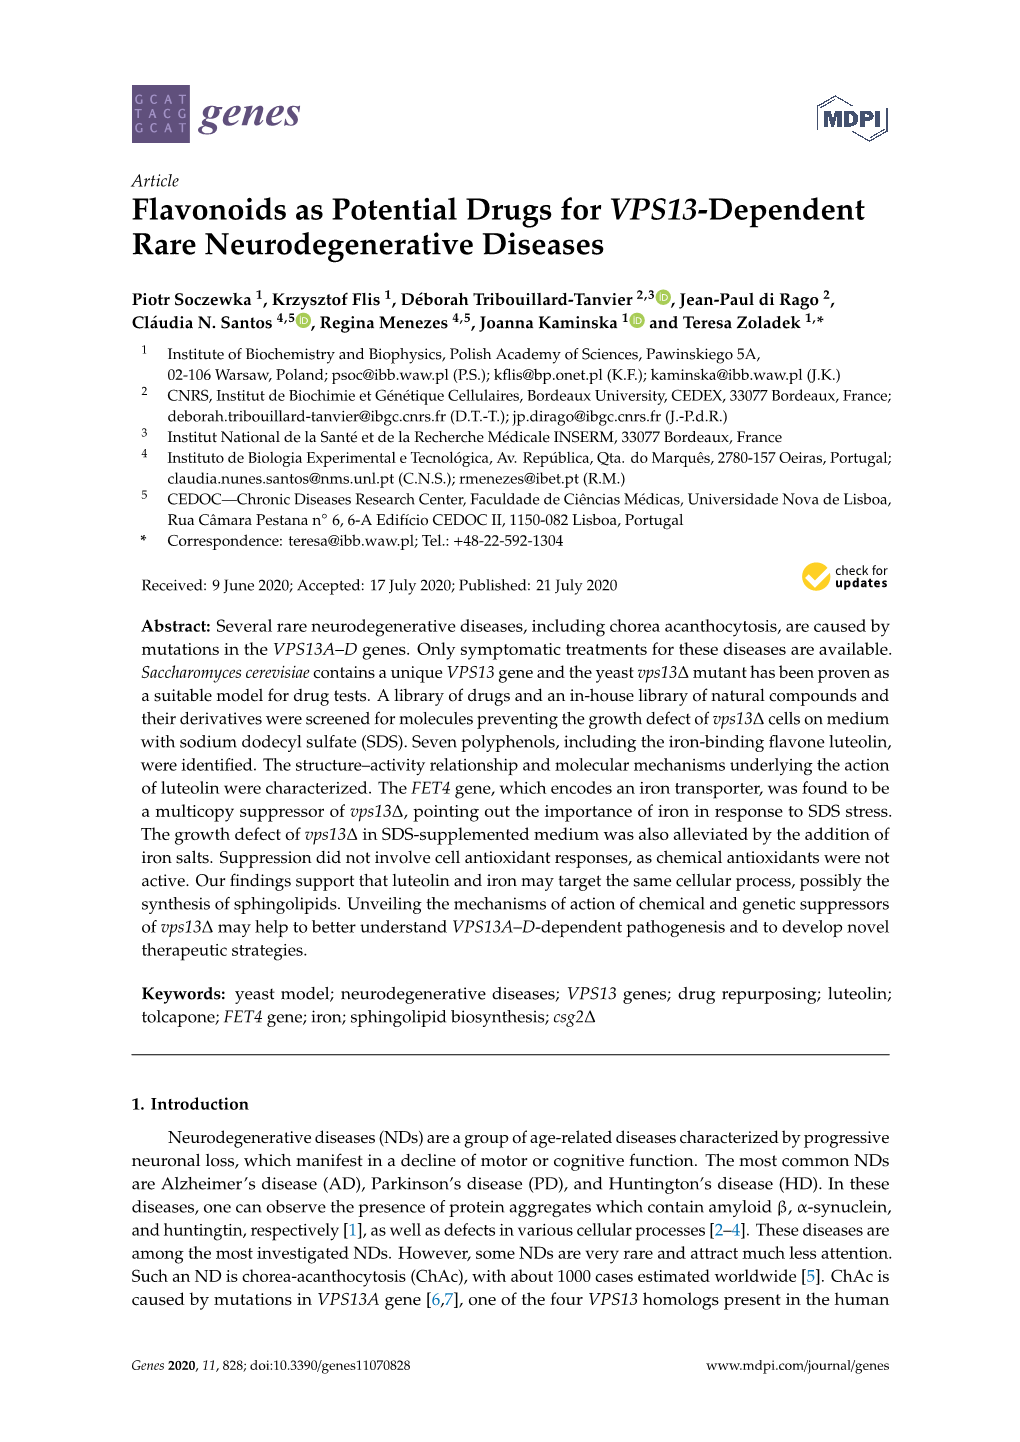 Flavonoids As Potential Drugs for VPS13-Dependent Rare Neurodegenerative Diseases